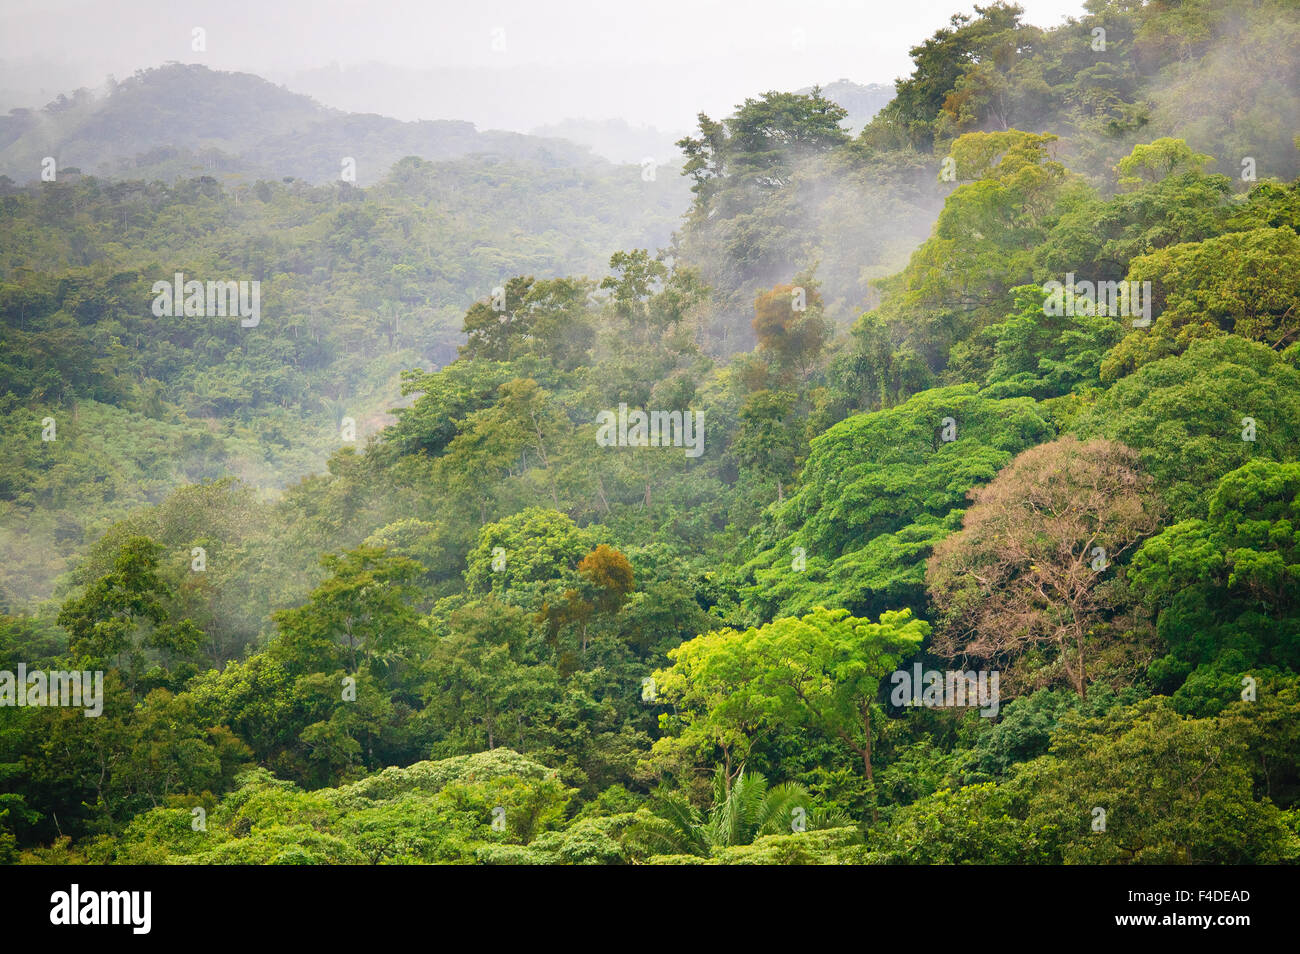 Panama-Landschaft mit nebligen tropischen Regenwäldern unter Cerro la Vieja in Chiguiri Arriba, Provinz Cocle, Republik Panama, Mittelamerika. Stockfoto